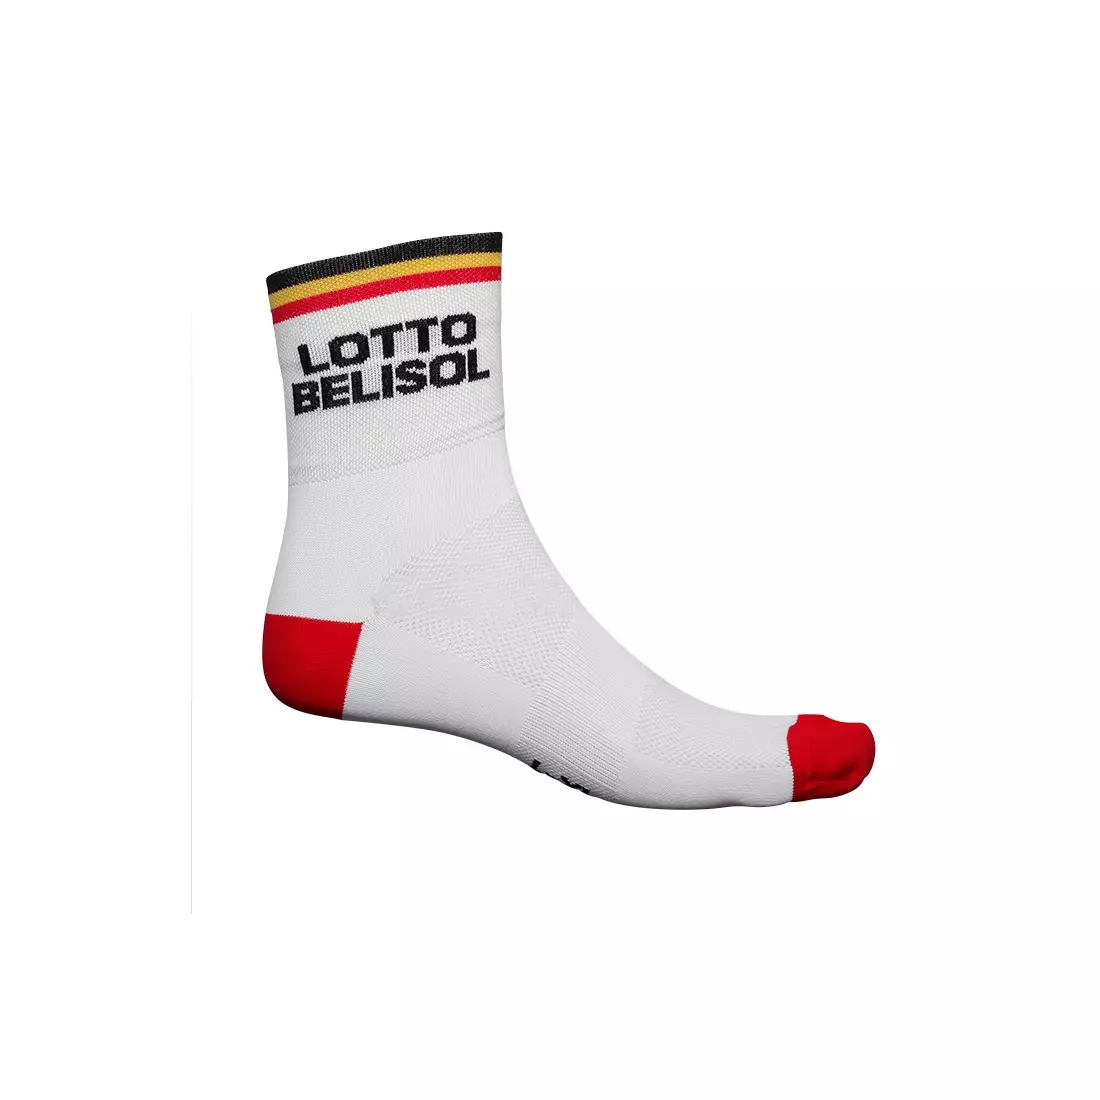 VERMARC - LOTTO BELISOL 2014 cycling socks